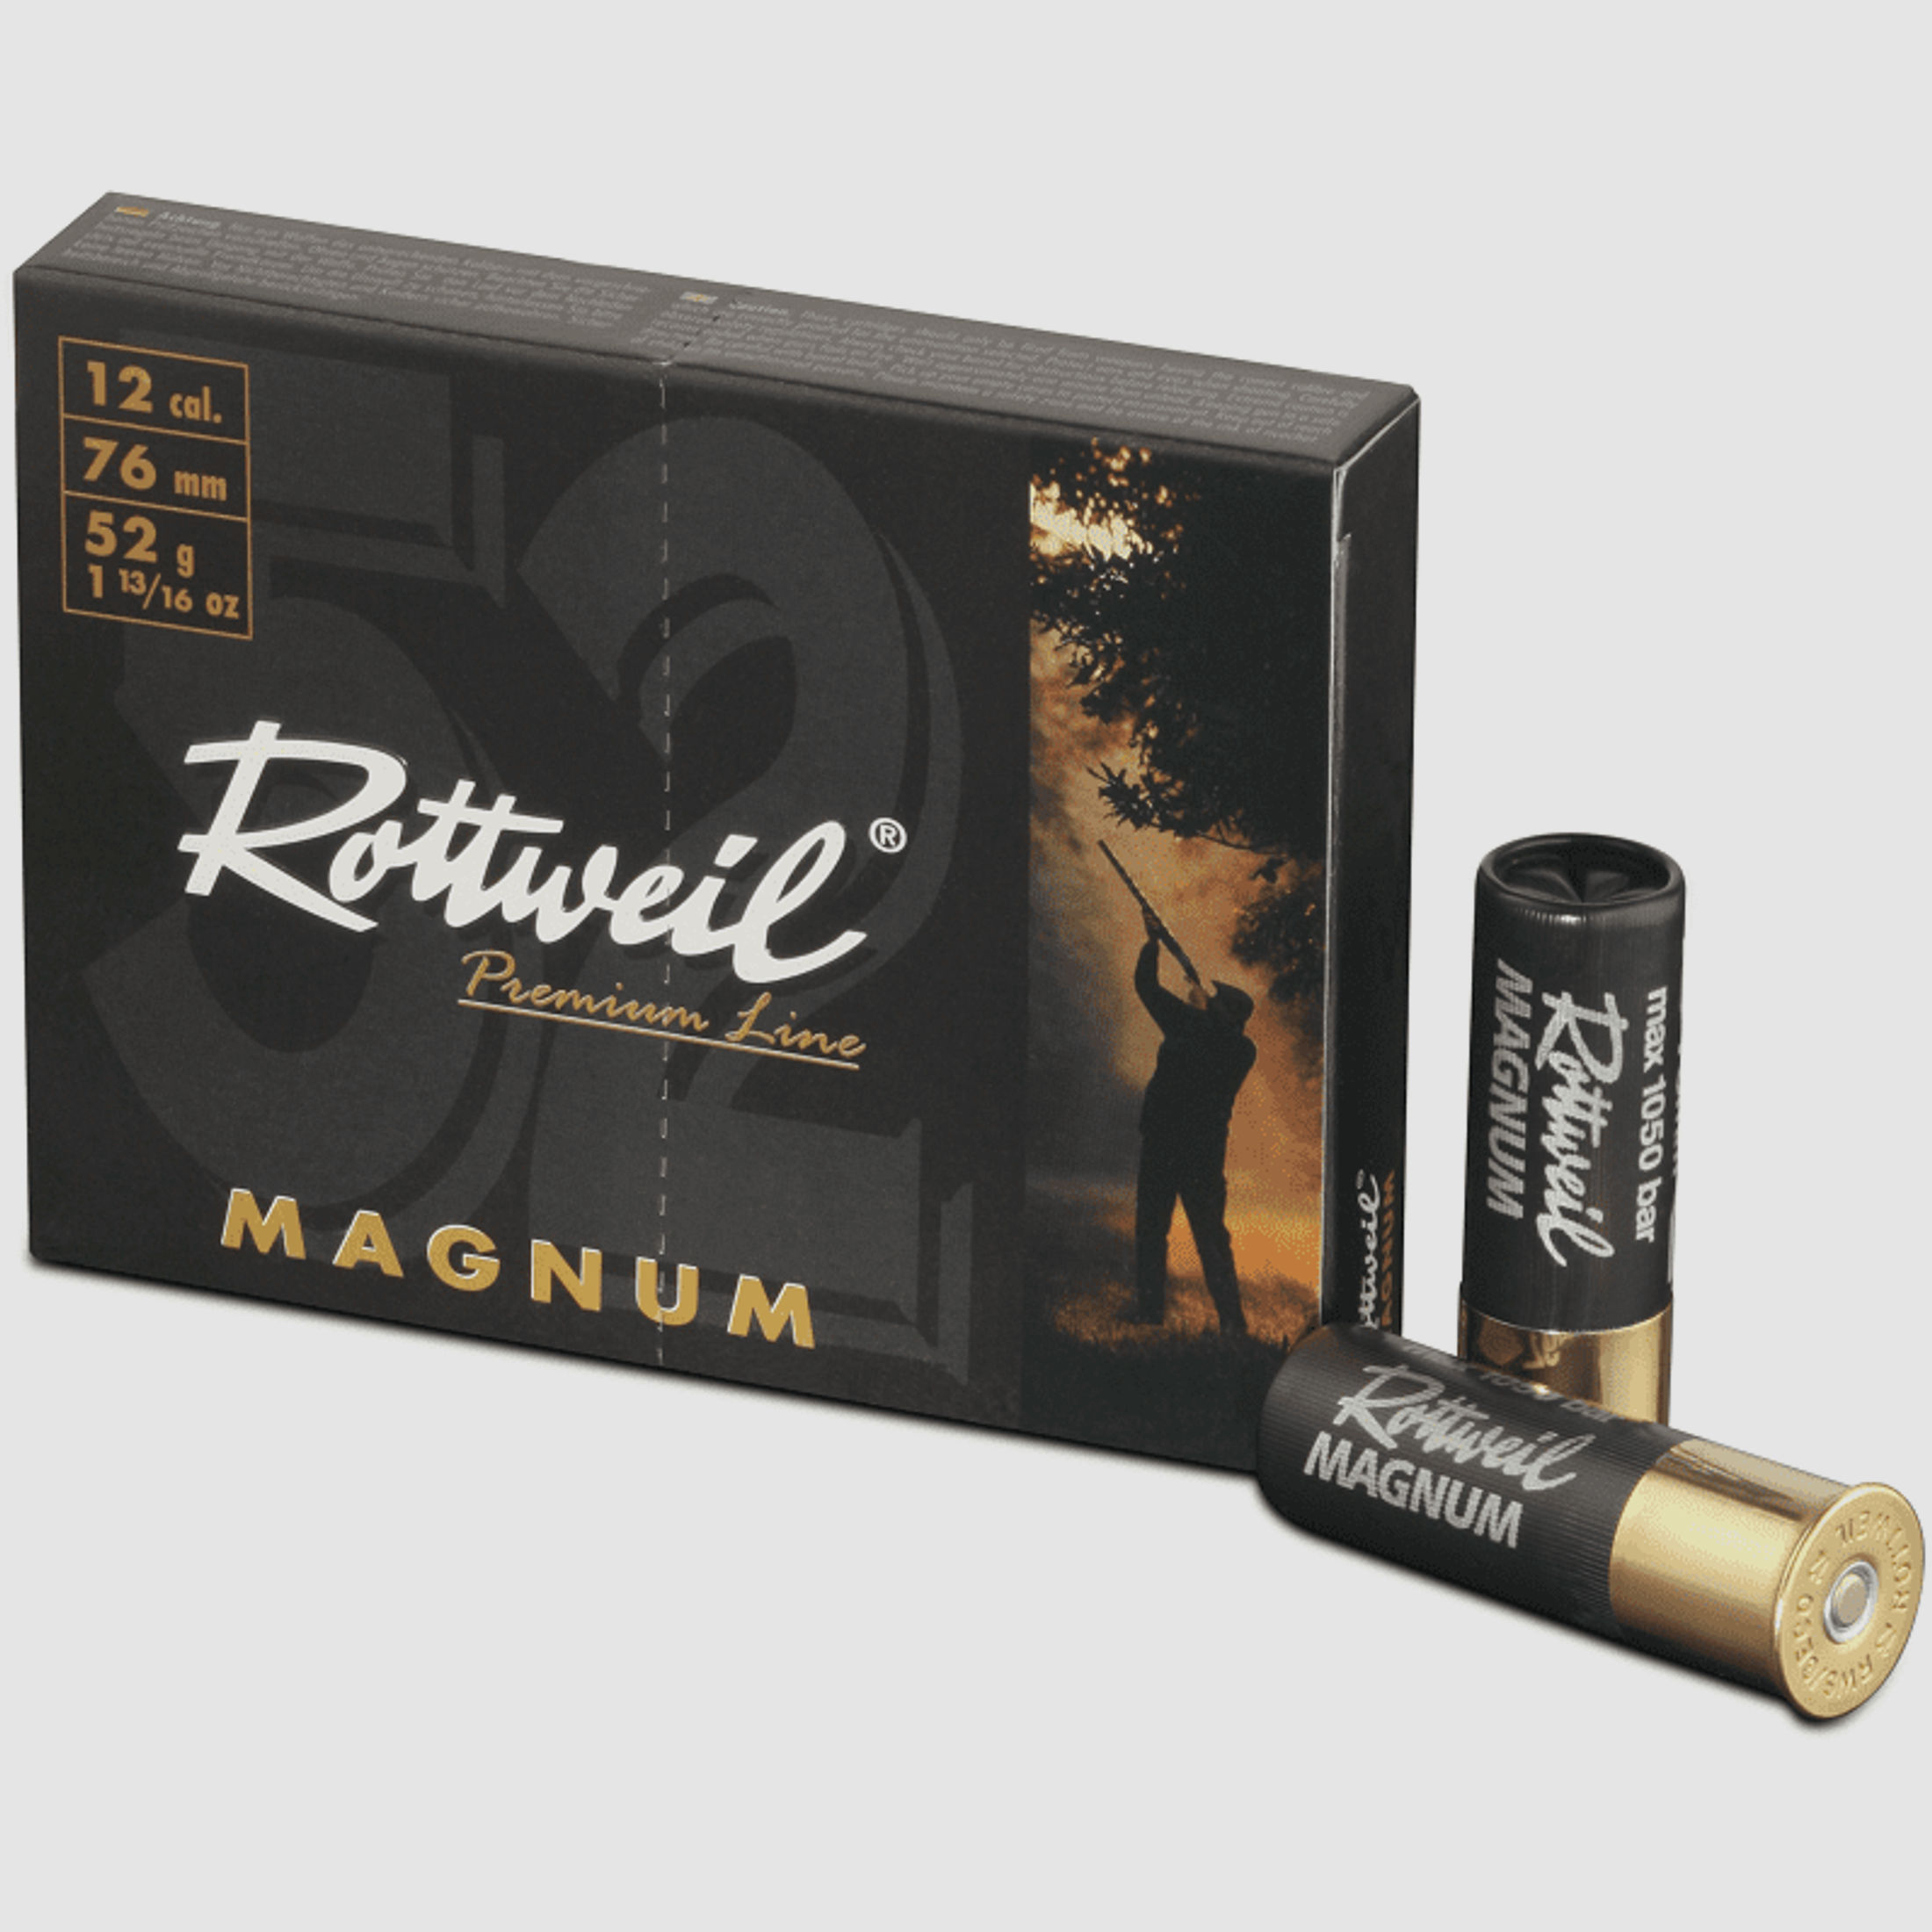 Rottweil Magnum 12/76 52g. 3,0mm